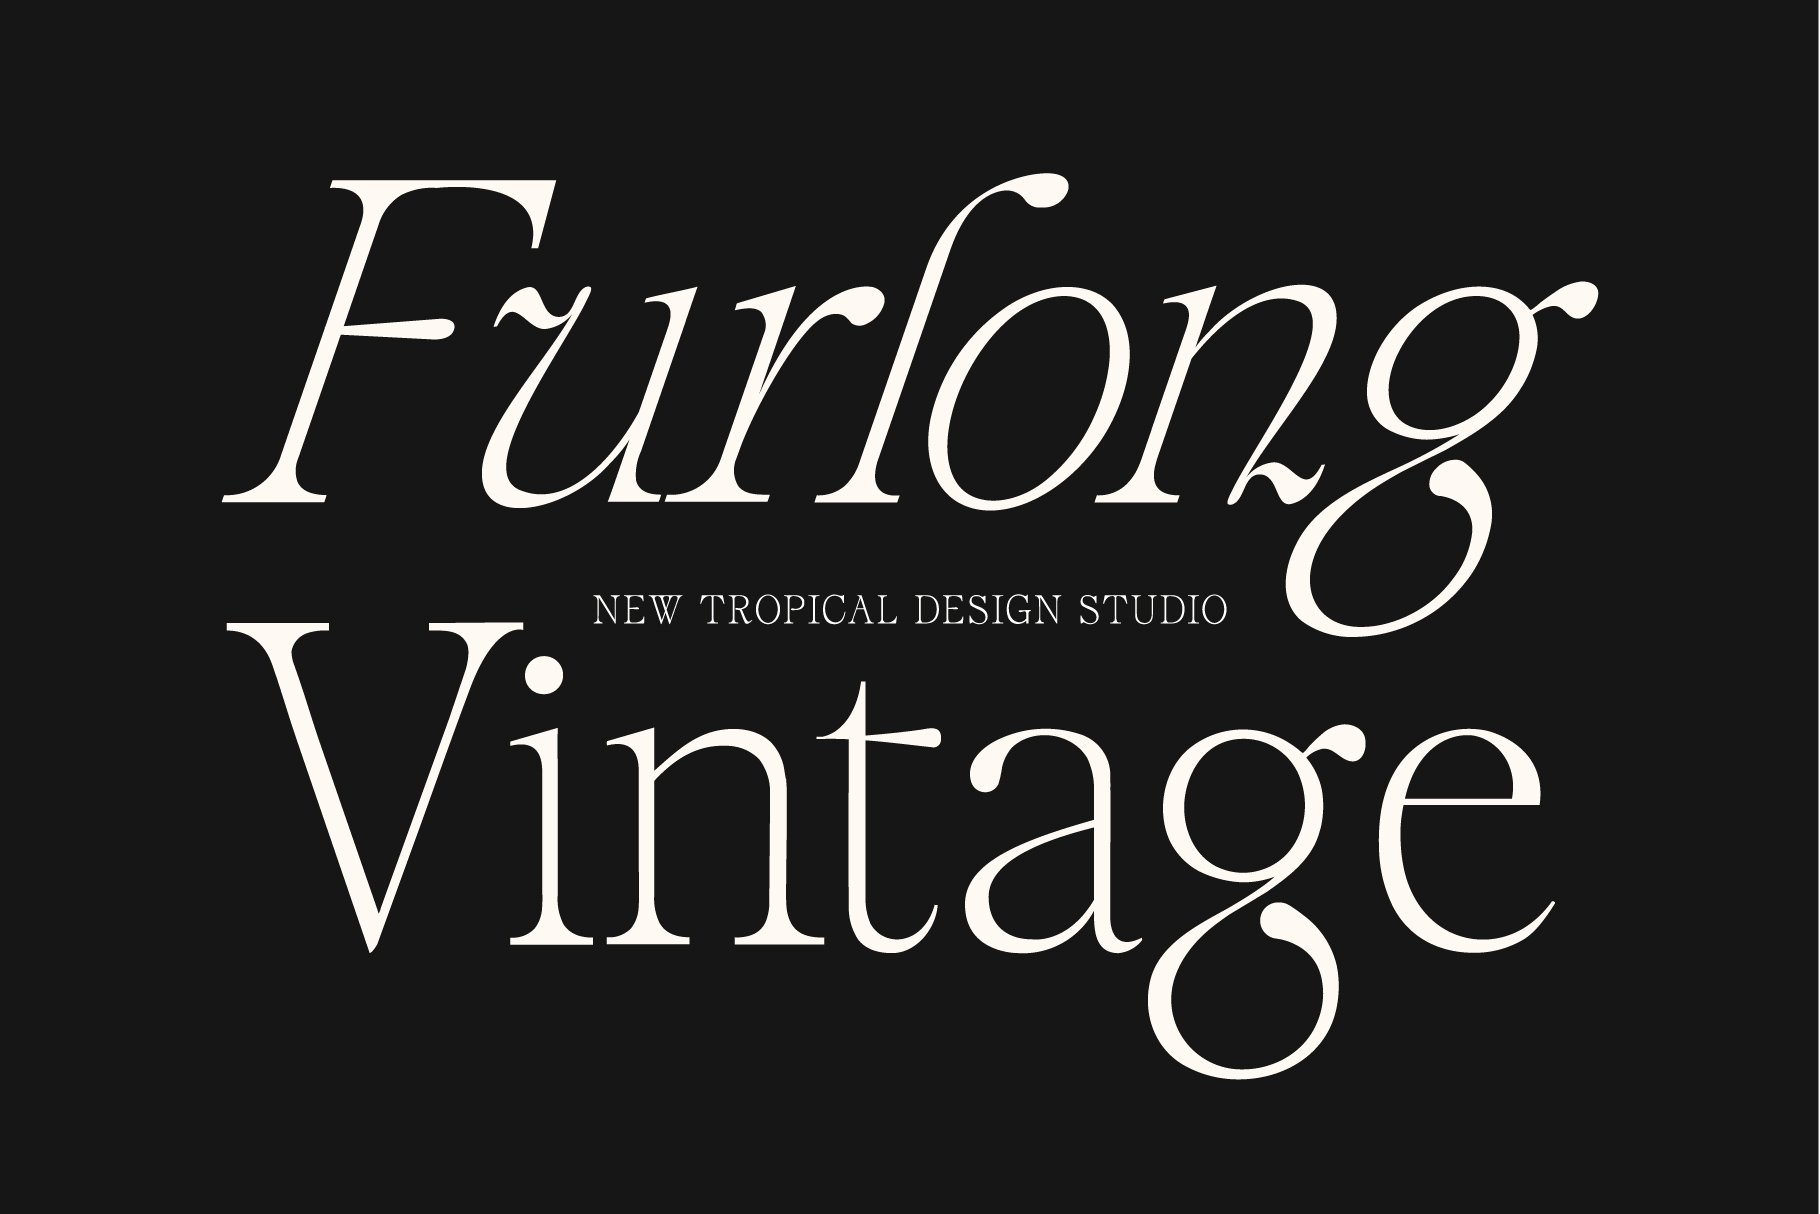 Furlong Vintage Serif Font cover image.